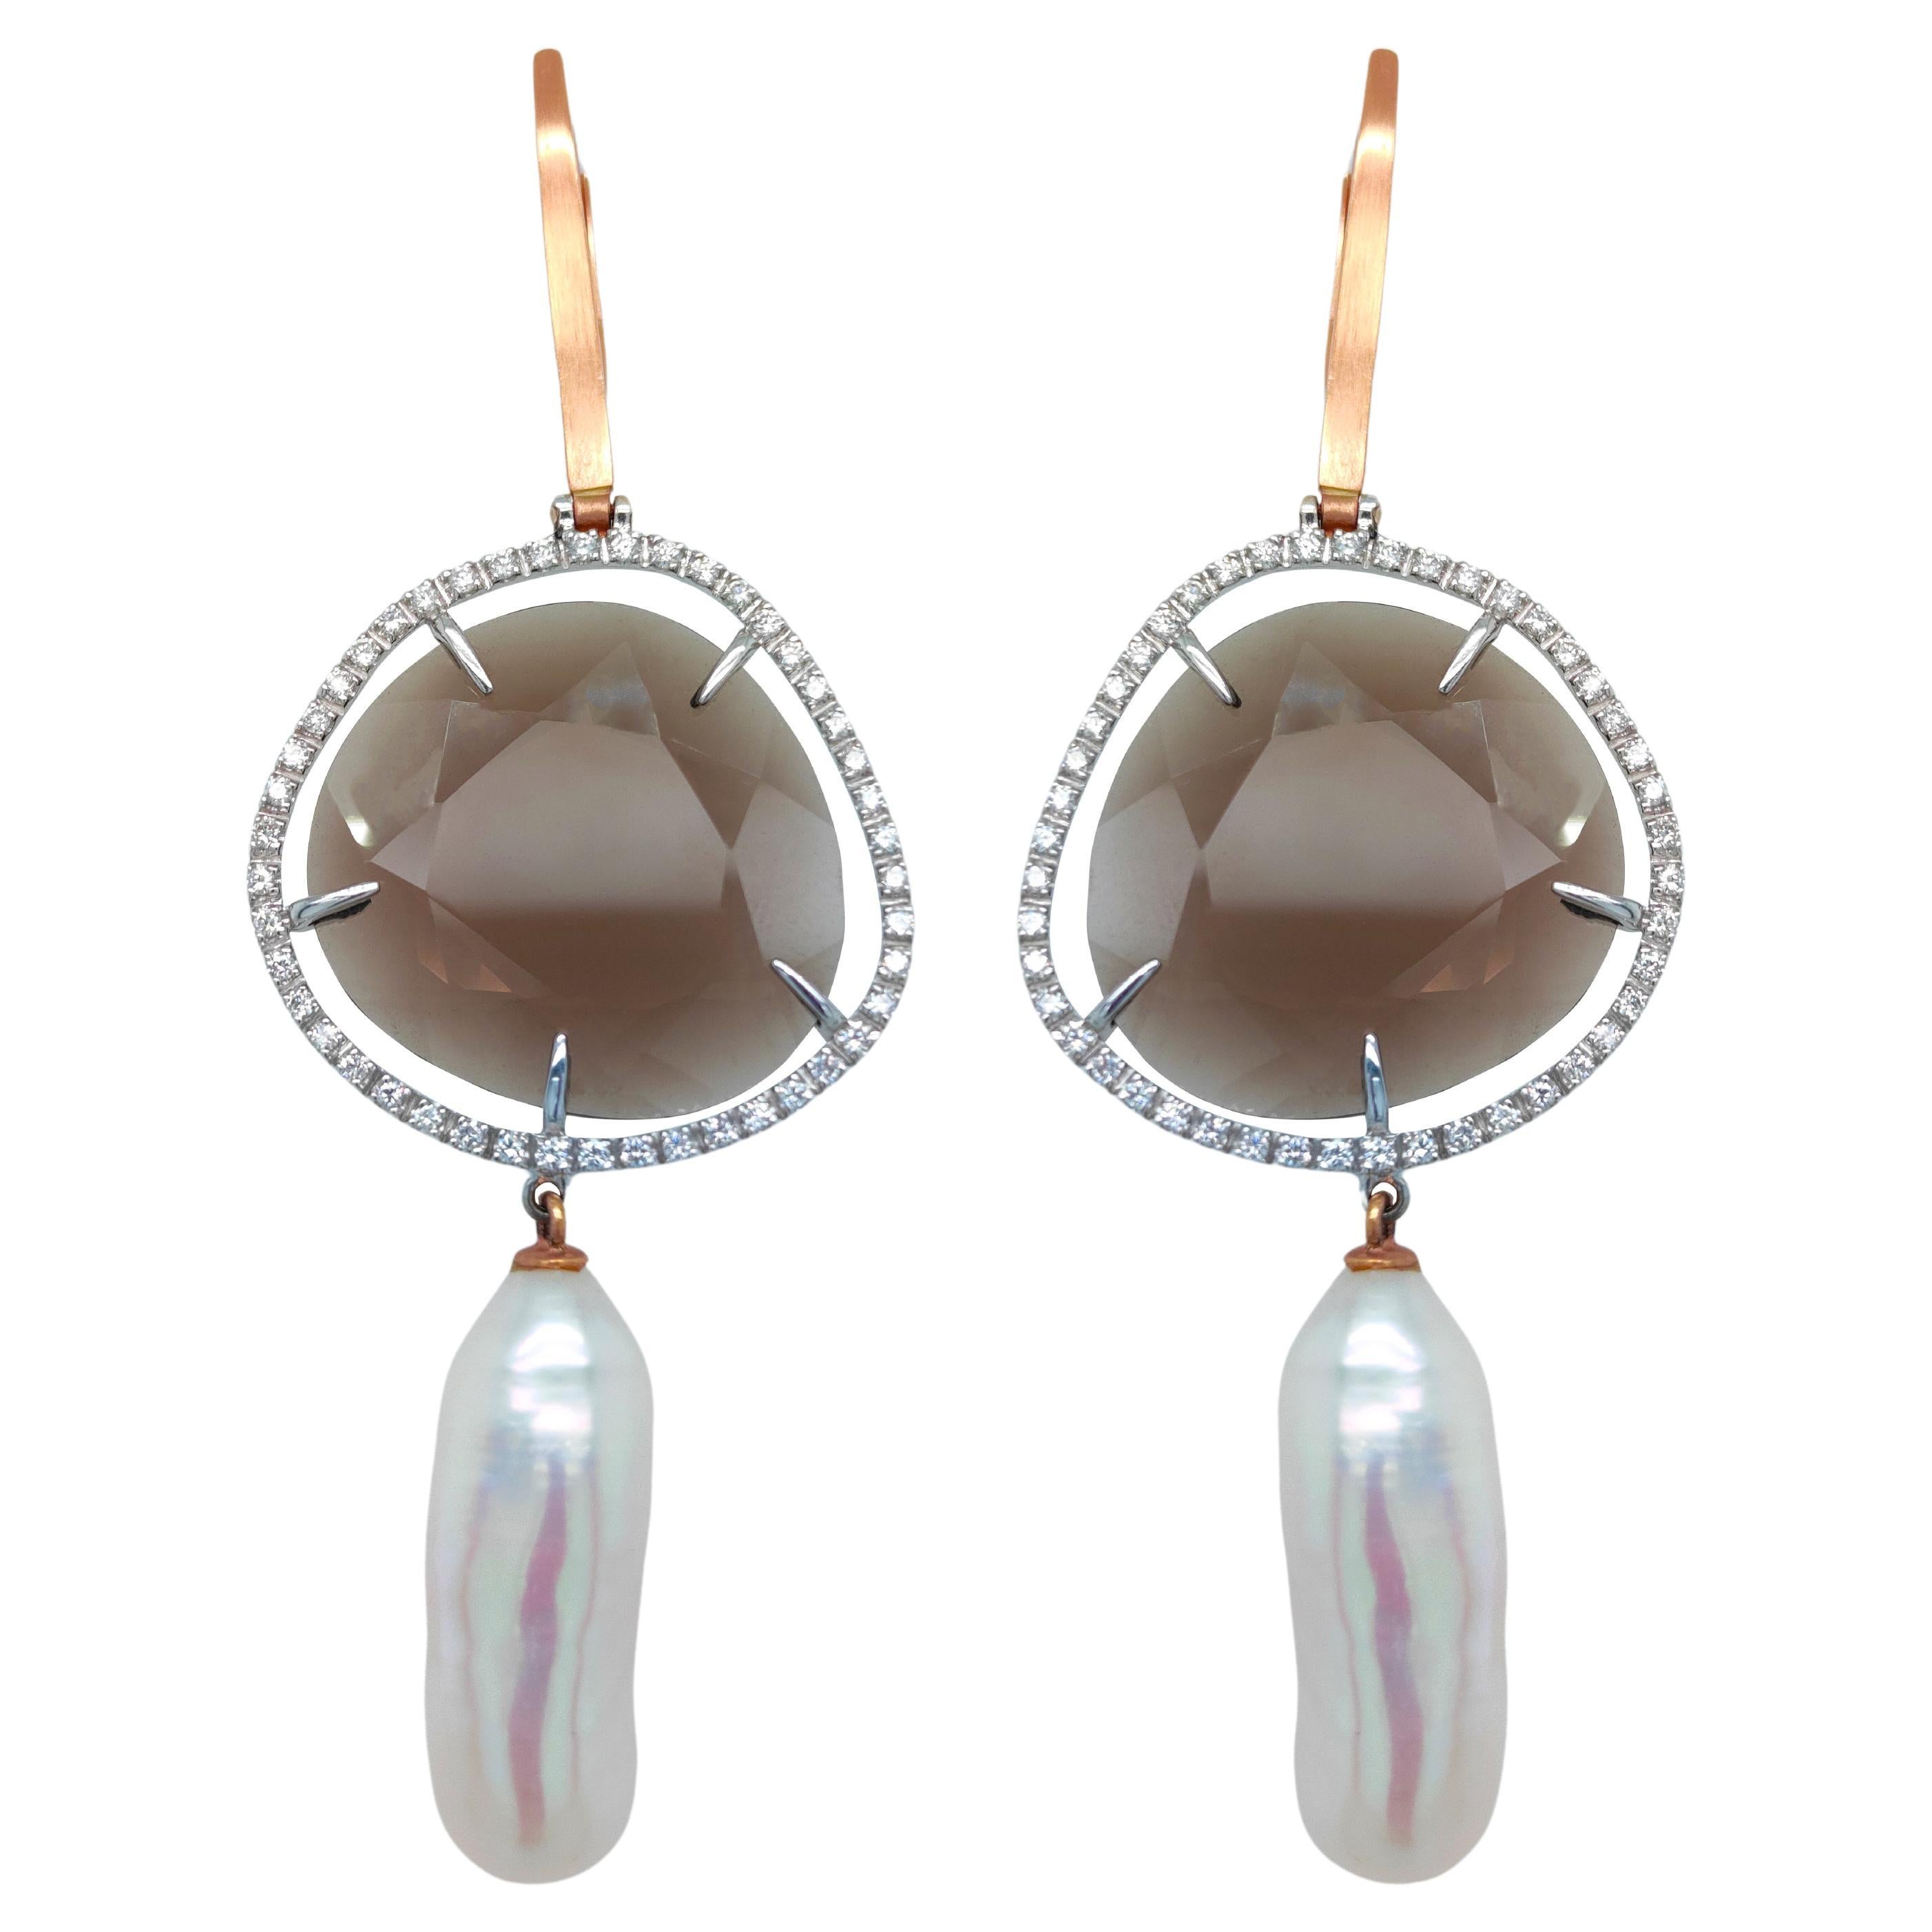 Boucles d'oreilles en or 18 carats, quartz fumé, diamants et perles keshi 